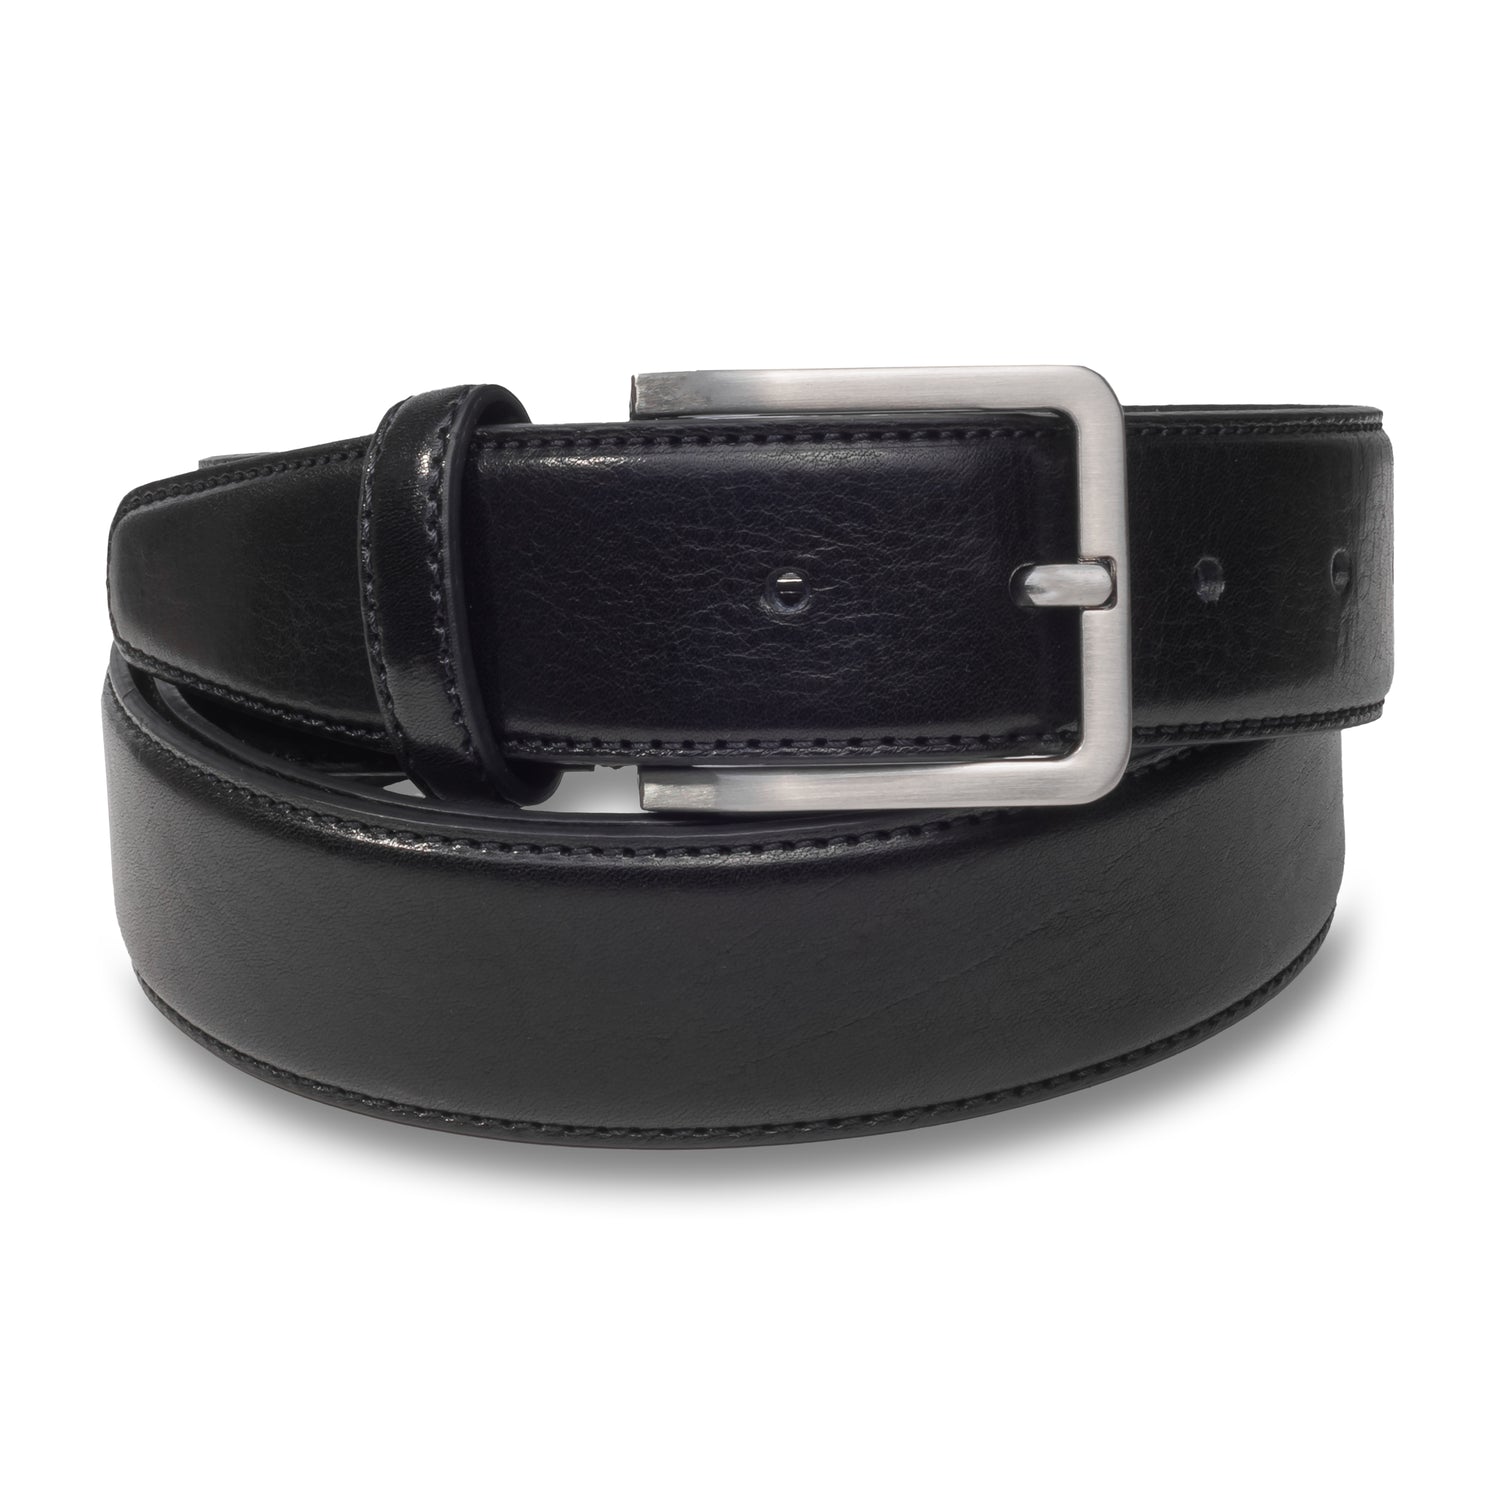 SISENTO 3,5 – & Italienische scarpe breit Ledergürtel - cm co Herrenschuhe schwarz